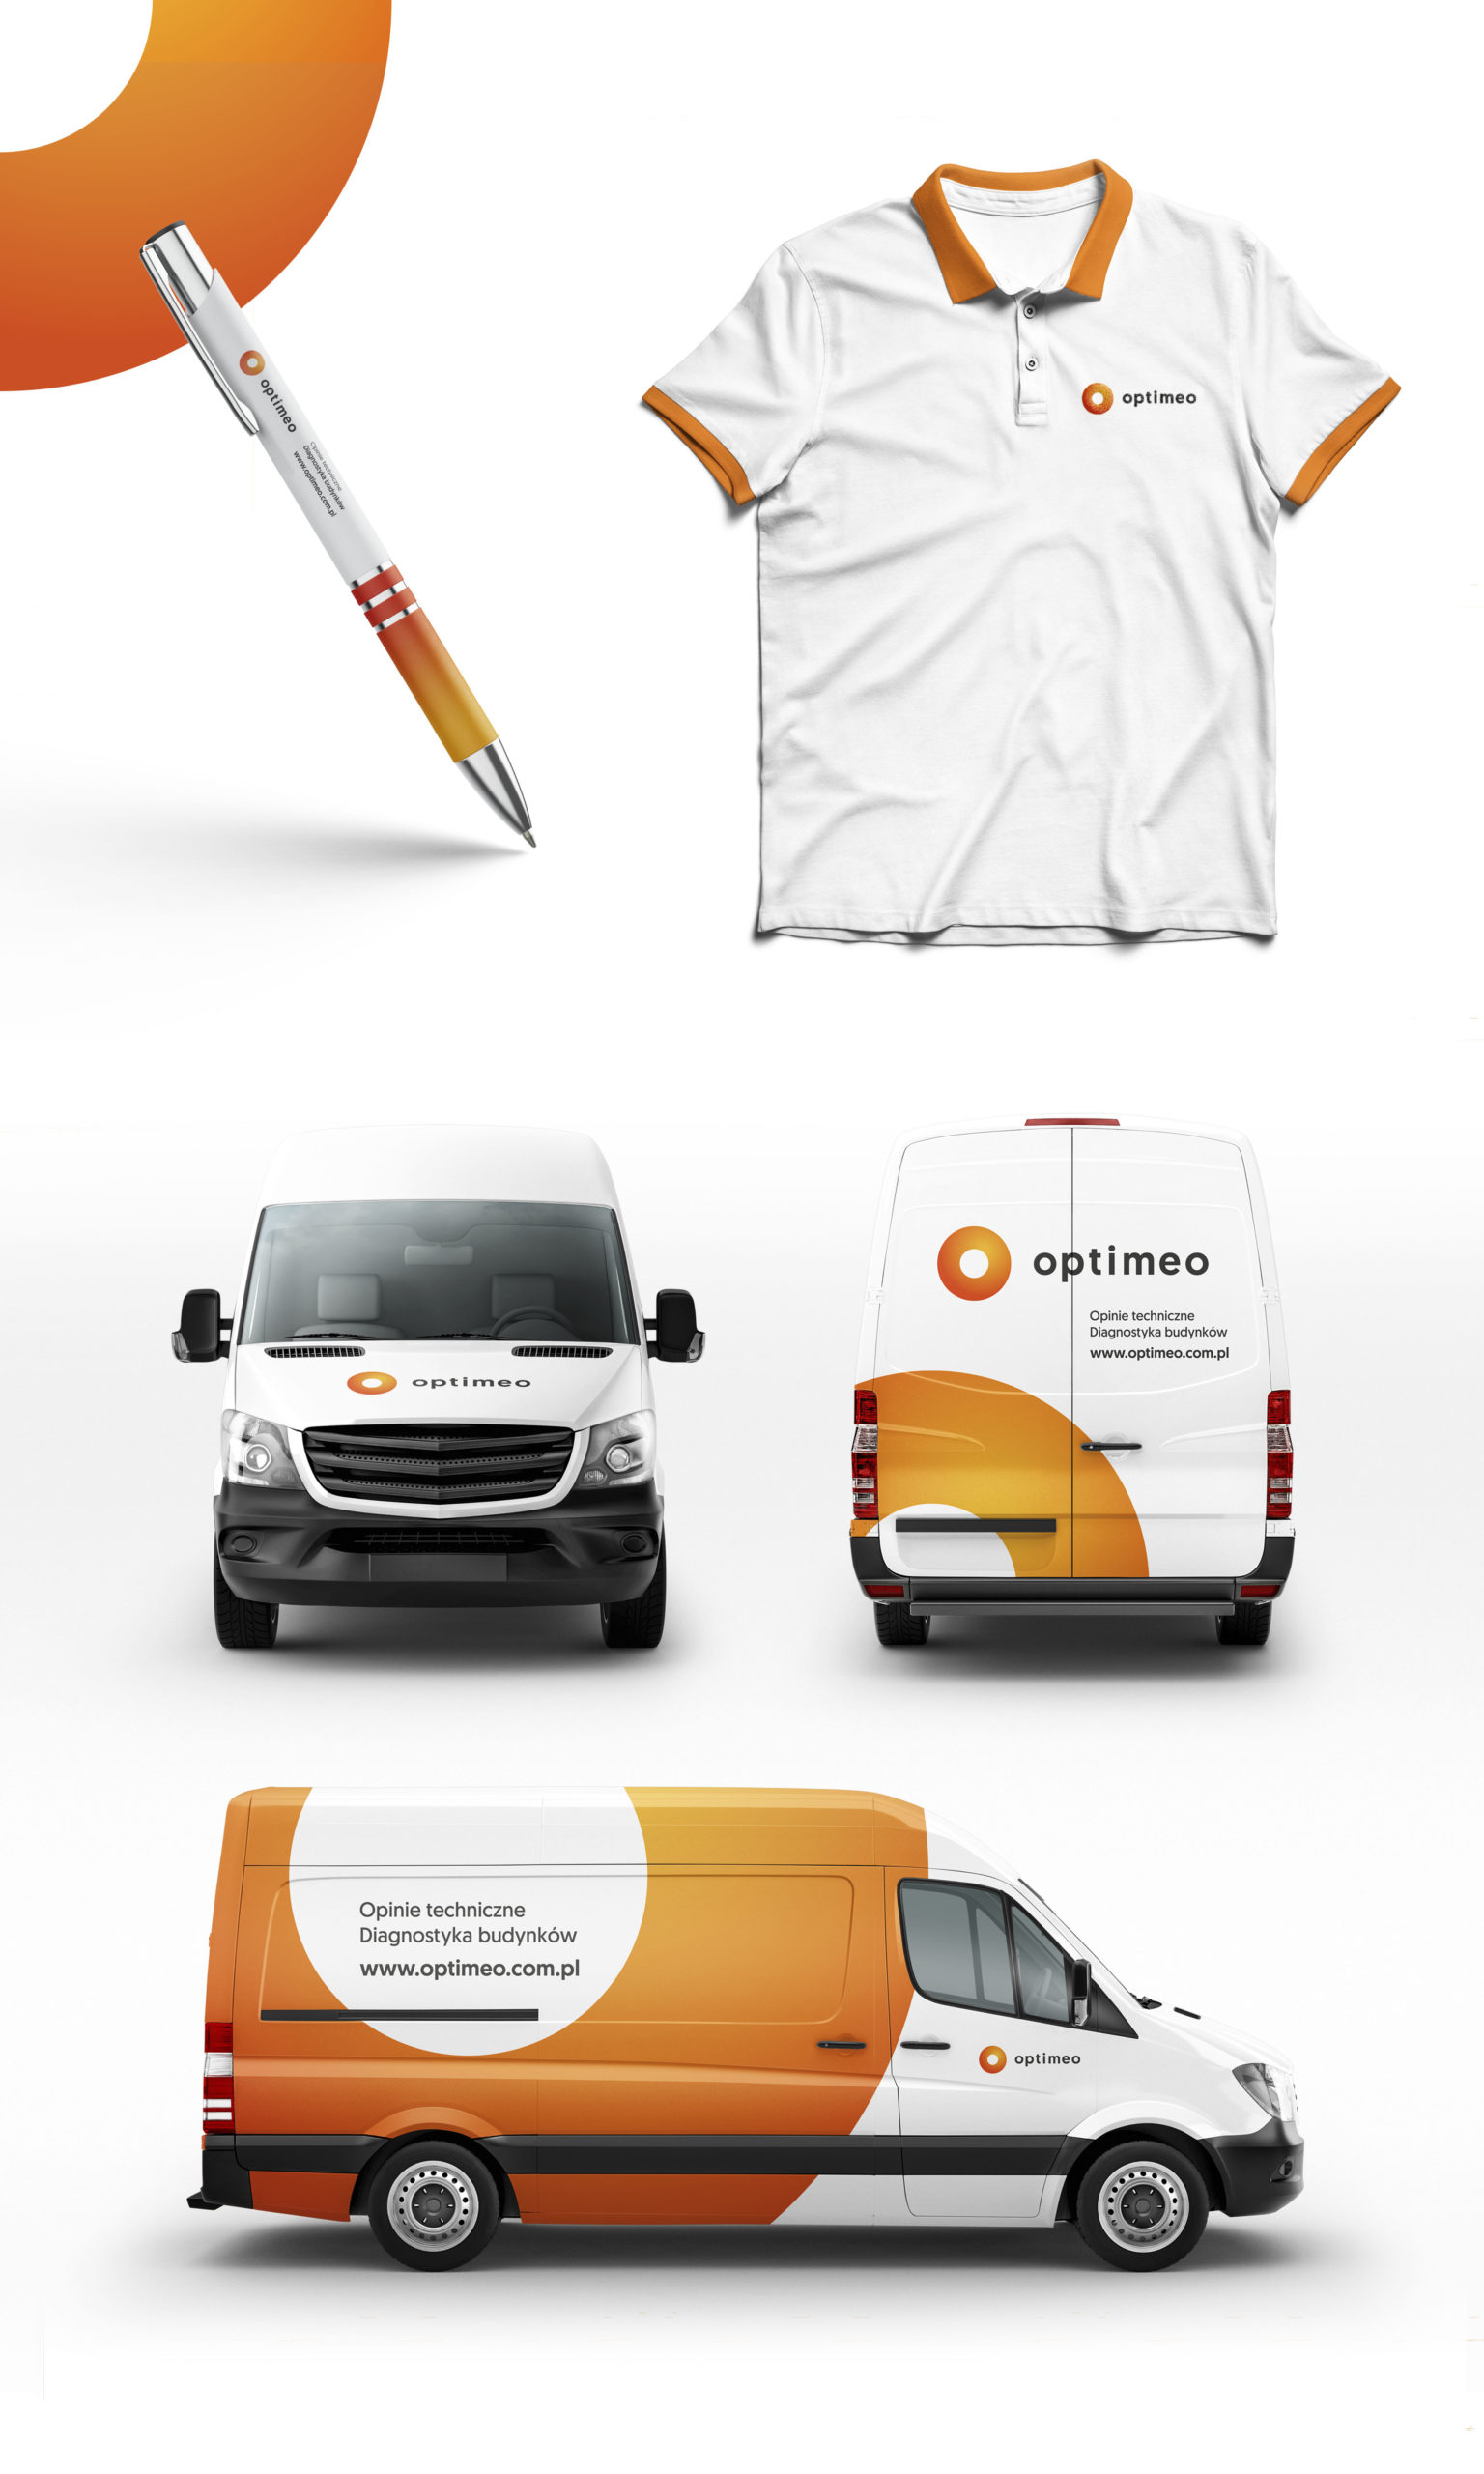 optimeo-branding-visual-identity-design-graphic-design-branding-logo-creative-agency-studio